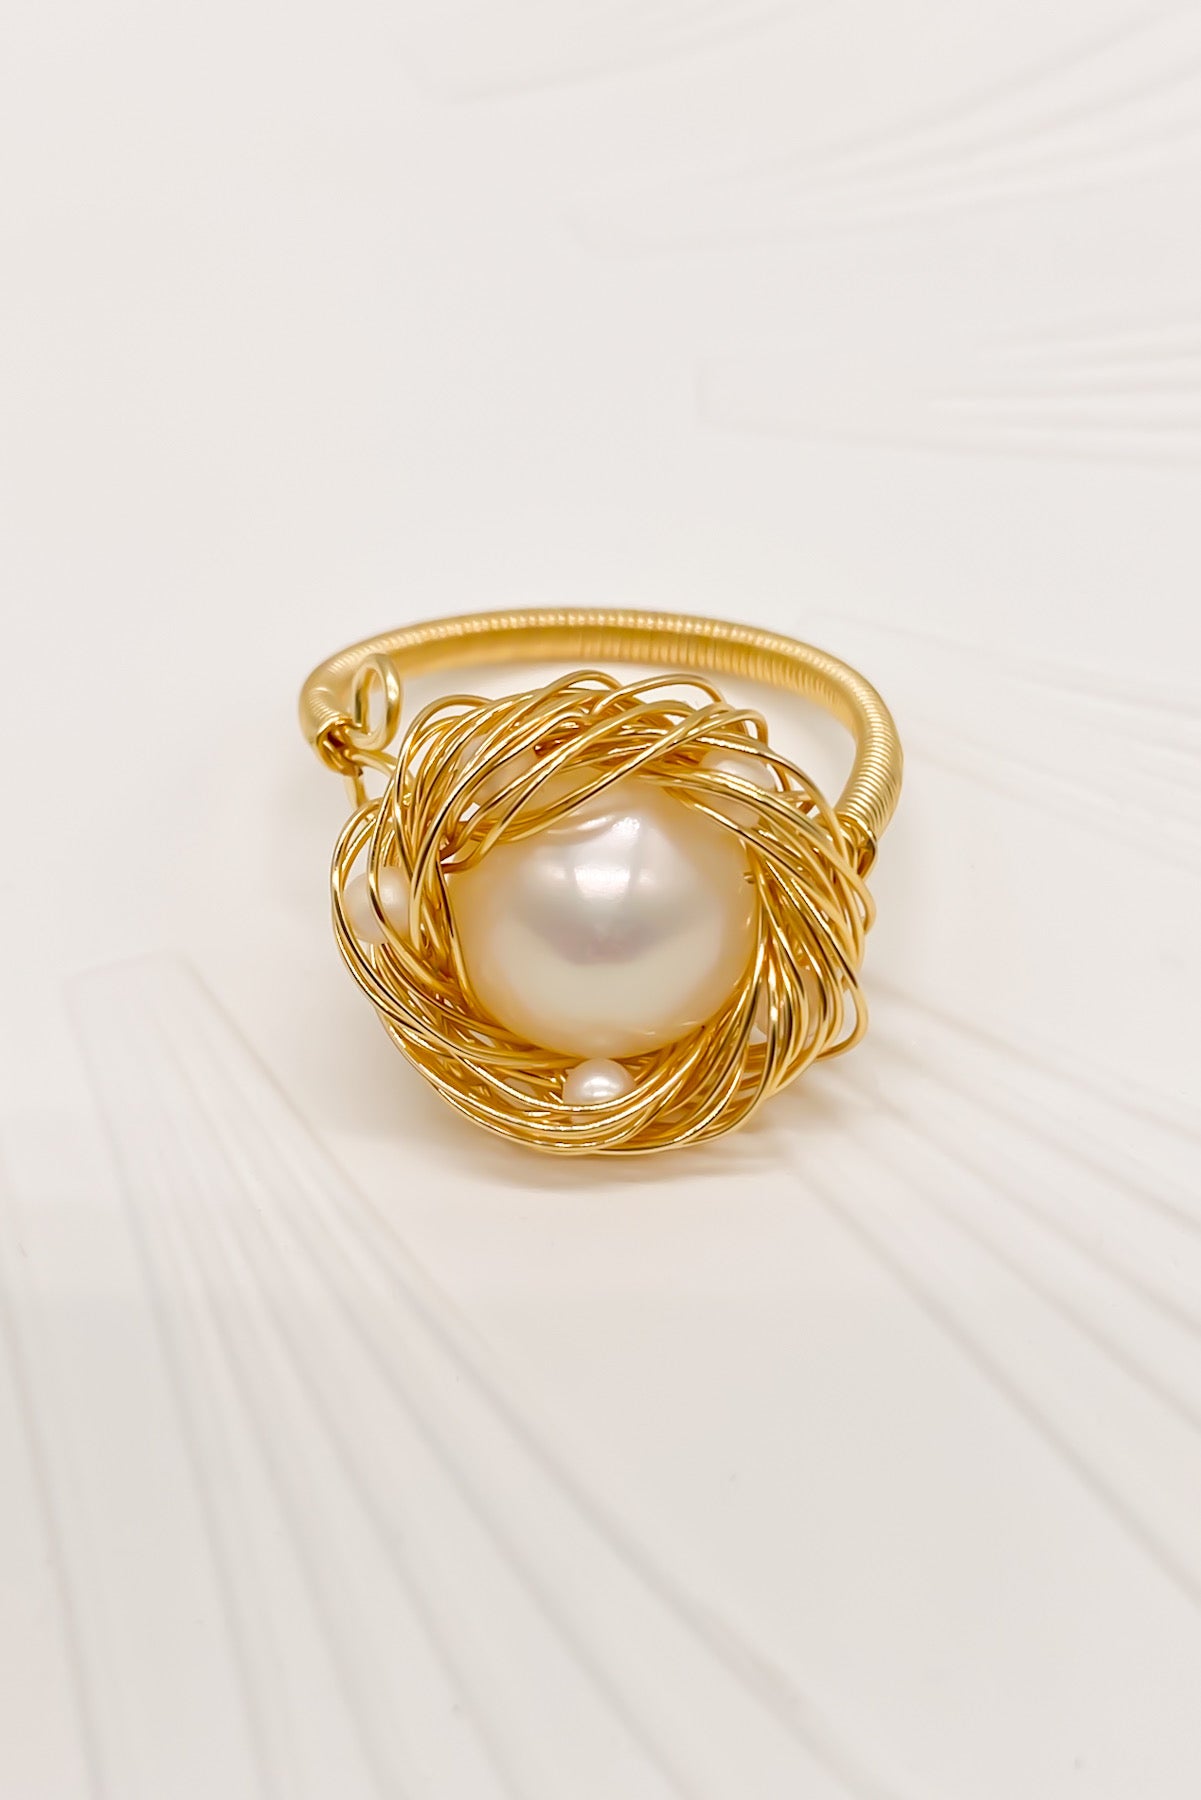 SKYE San Francisco Shop Chic Modern Elegant Classy Women Jewelry French Parisian Minimalist Irene Gold Freshwater Pearl Ring 2